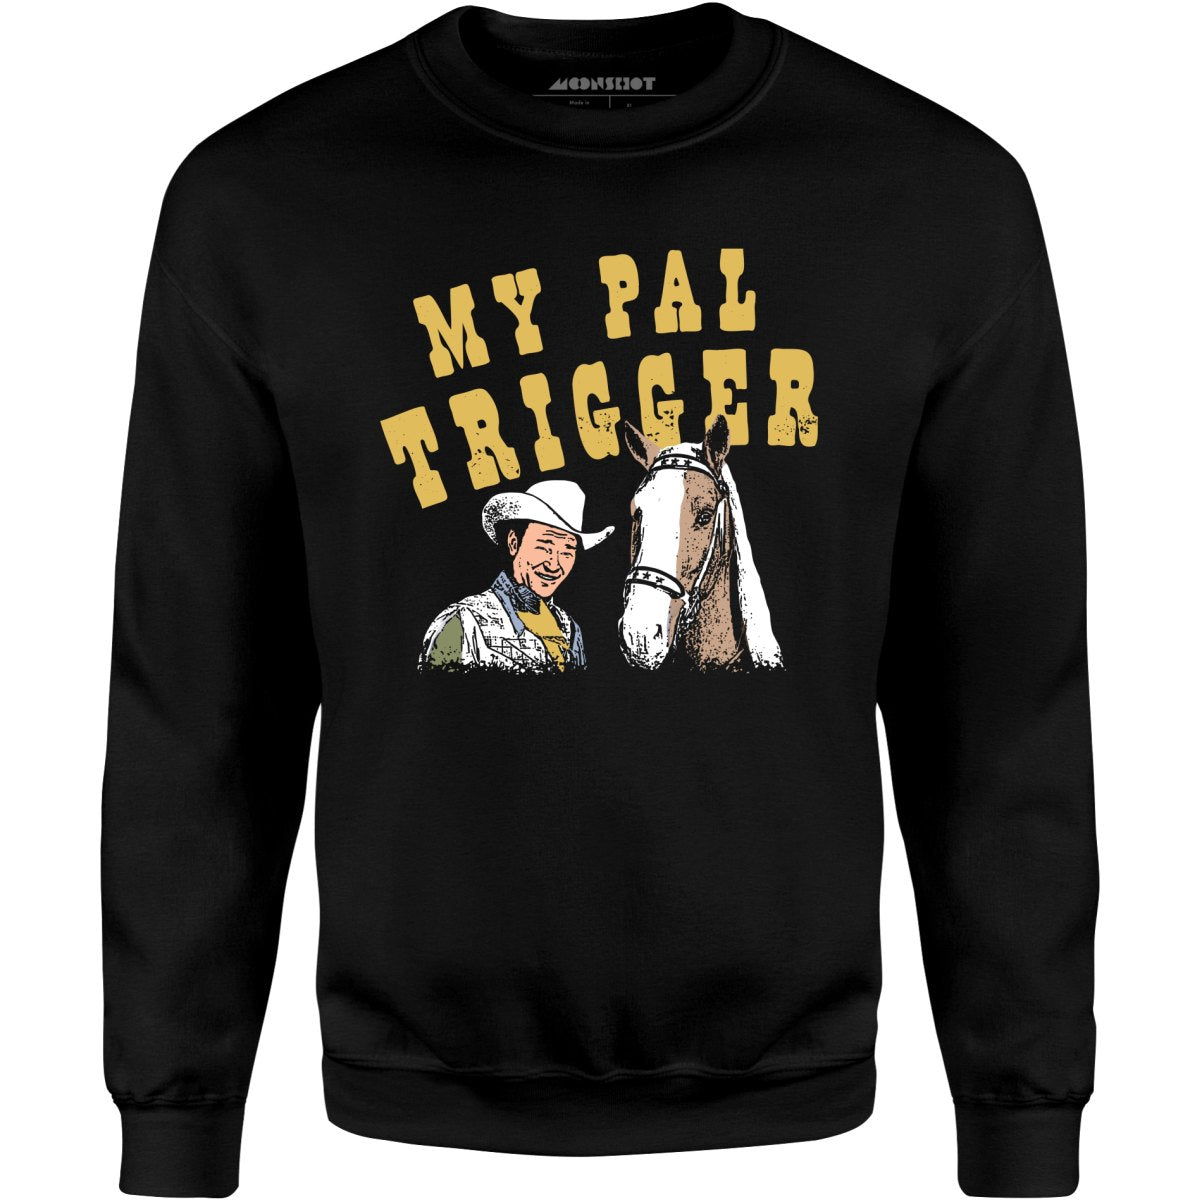 My Pal Trigger - Unisex Sweatshirt